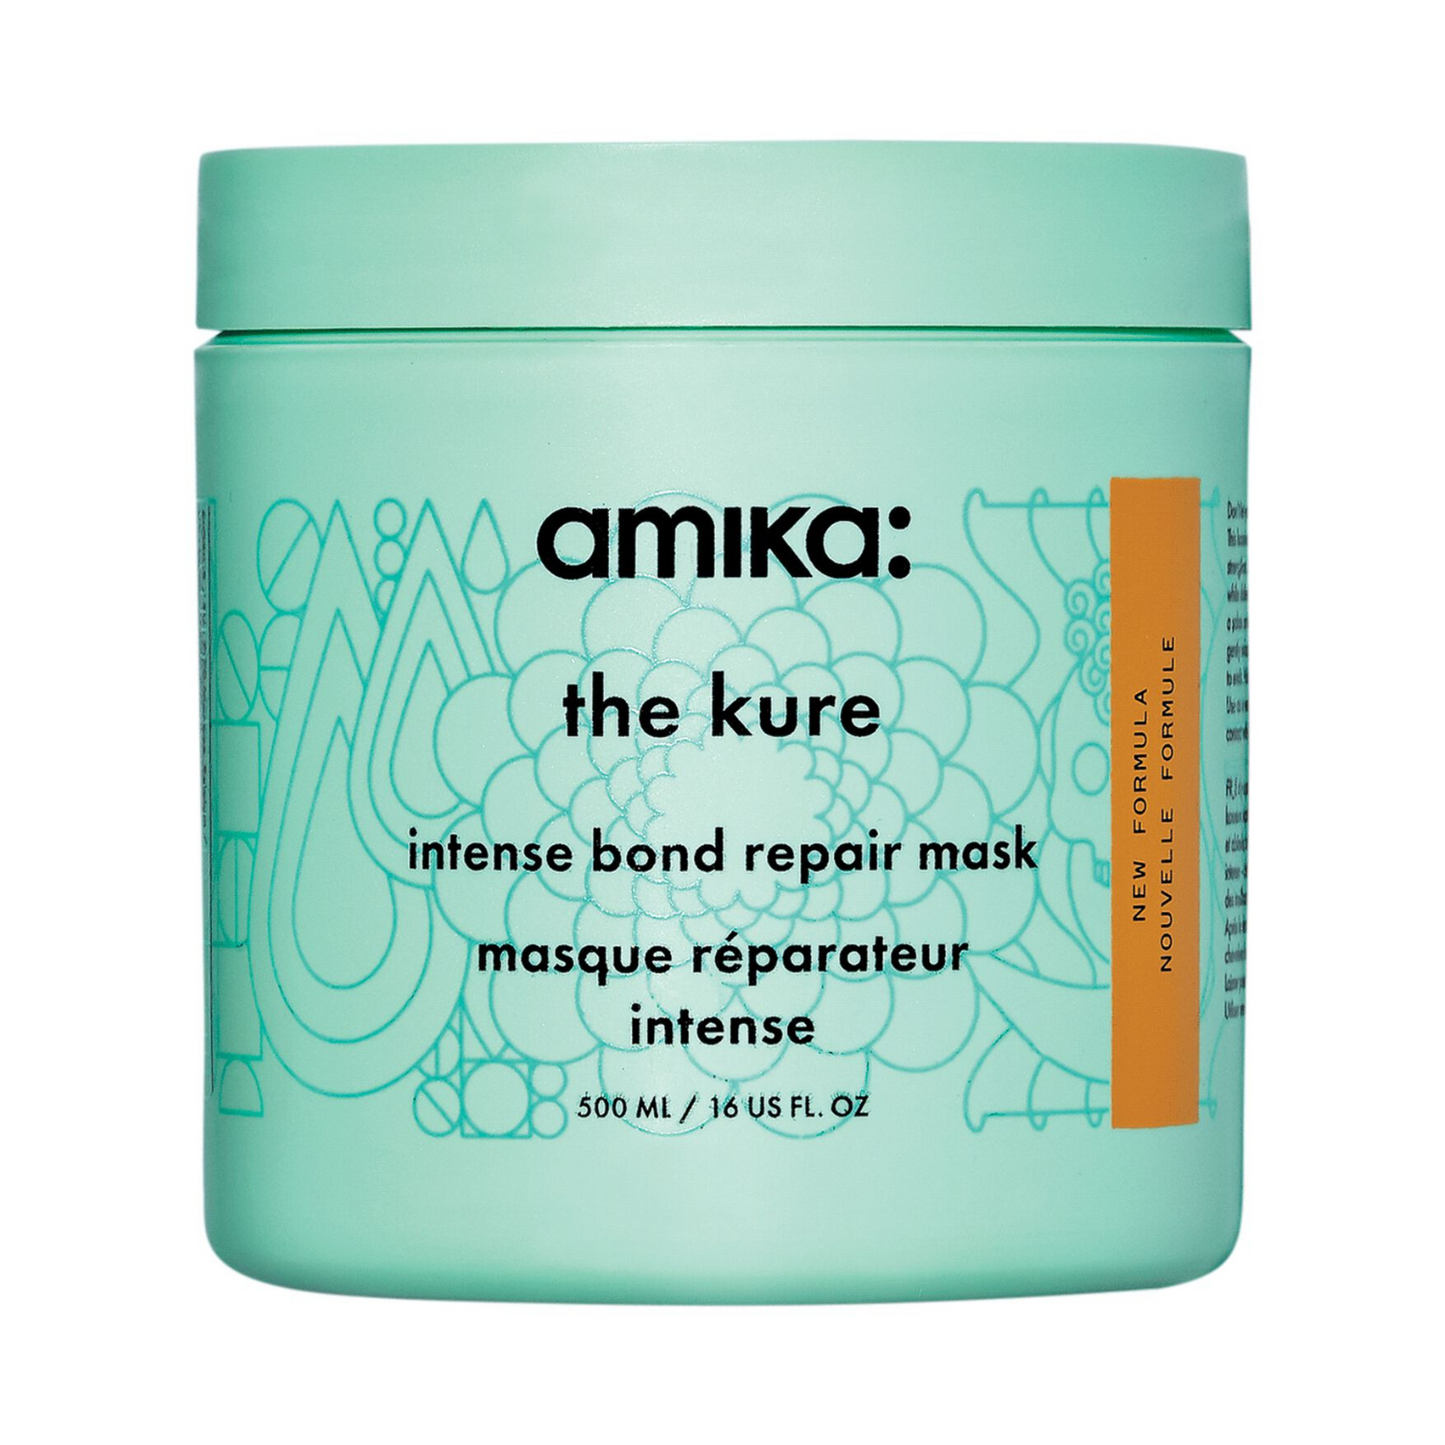 amika - The Kure Intense Bond Repair Mask